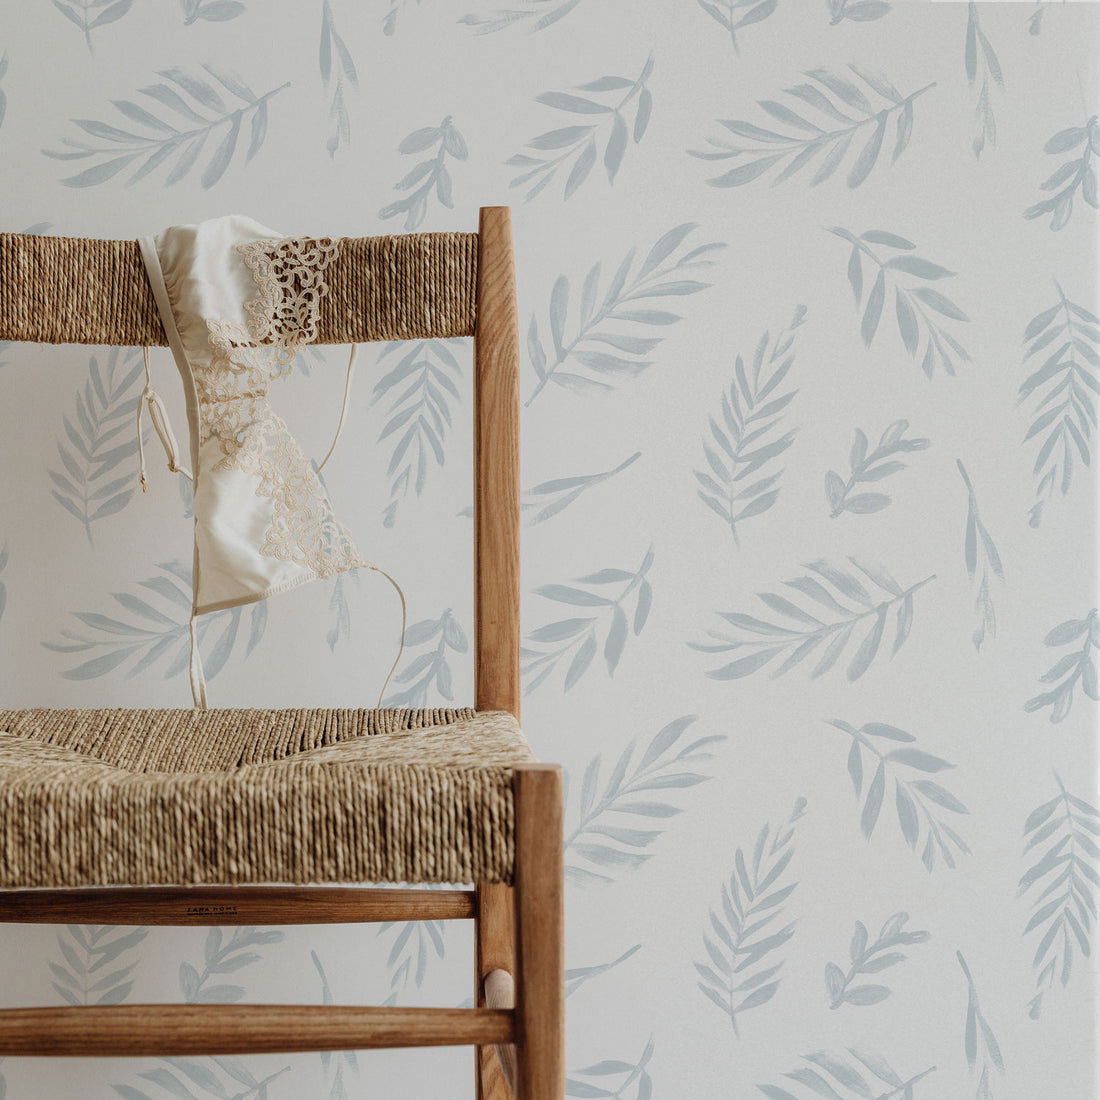 Soft blue leaves design removable wallpaper for boho style bedroom interiors